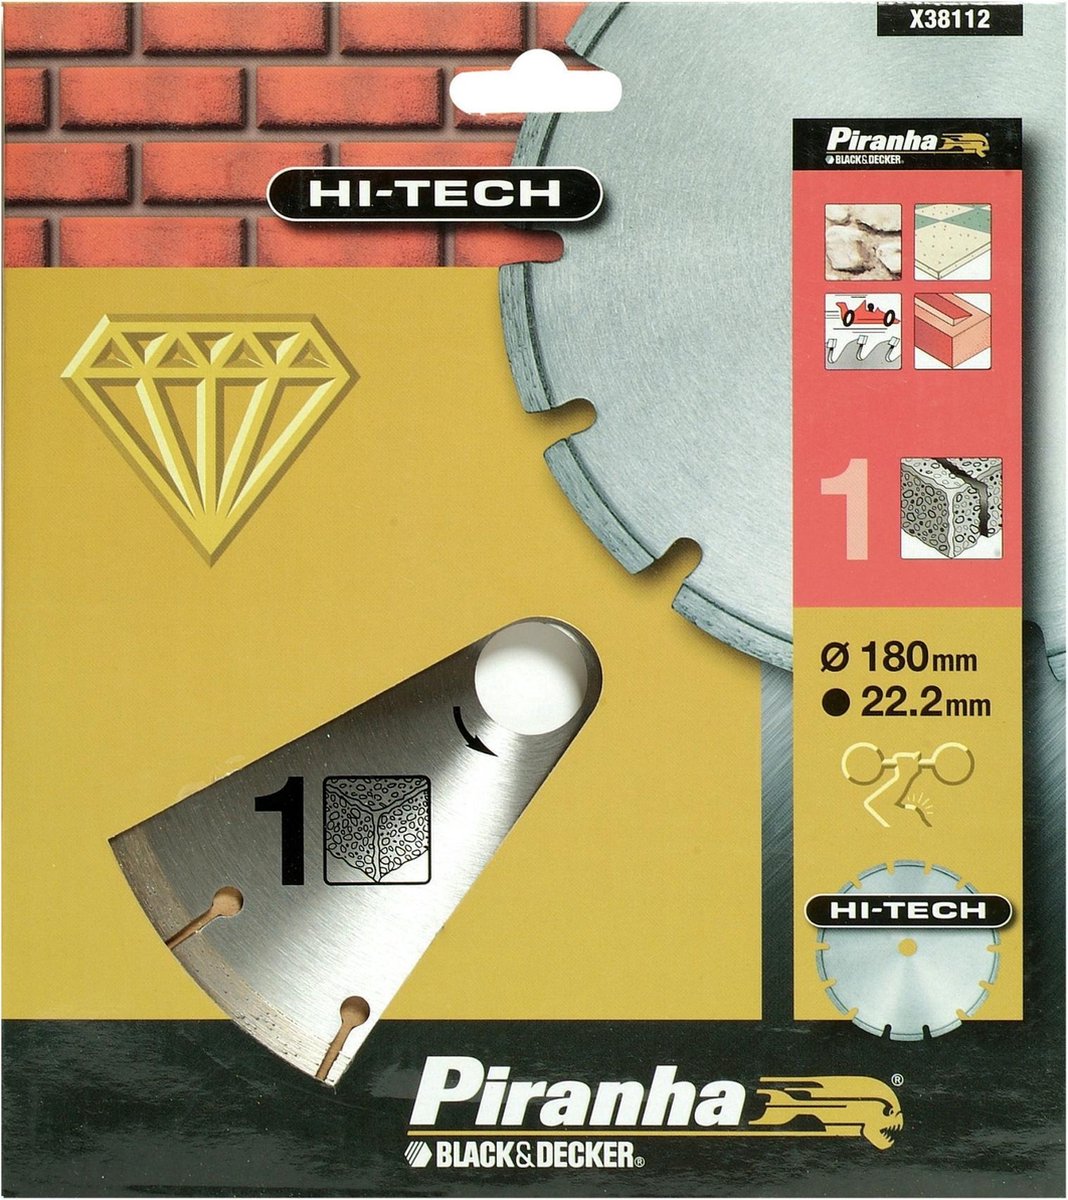 Piranha HI-TECH - diamantblad - gesegmenteerde rand - 180 mm - X38112